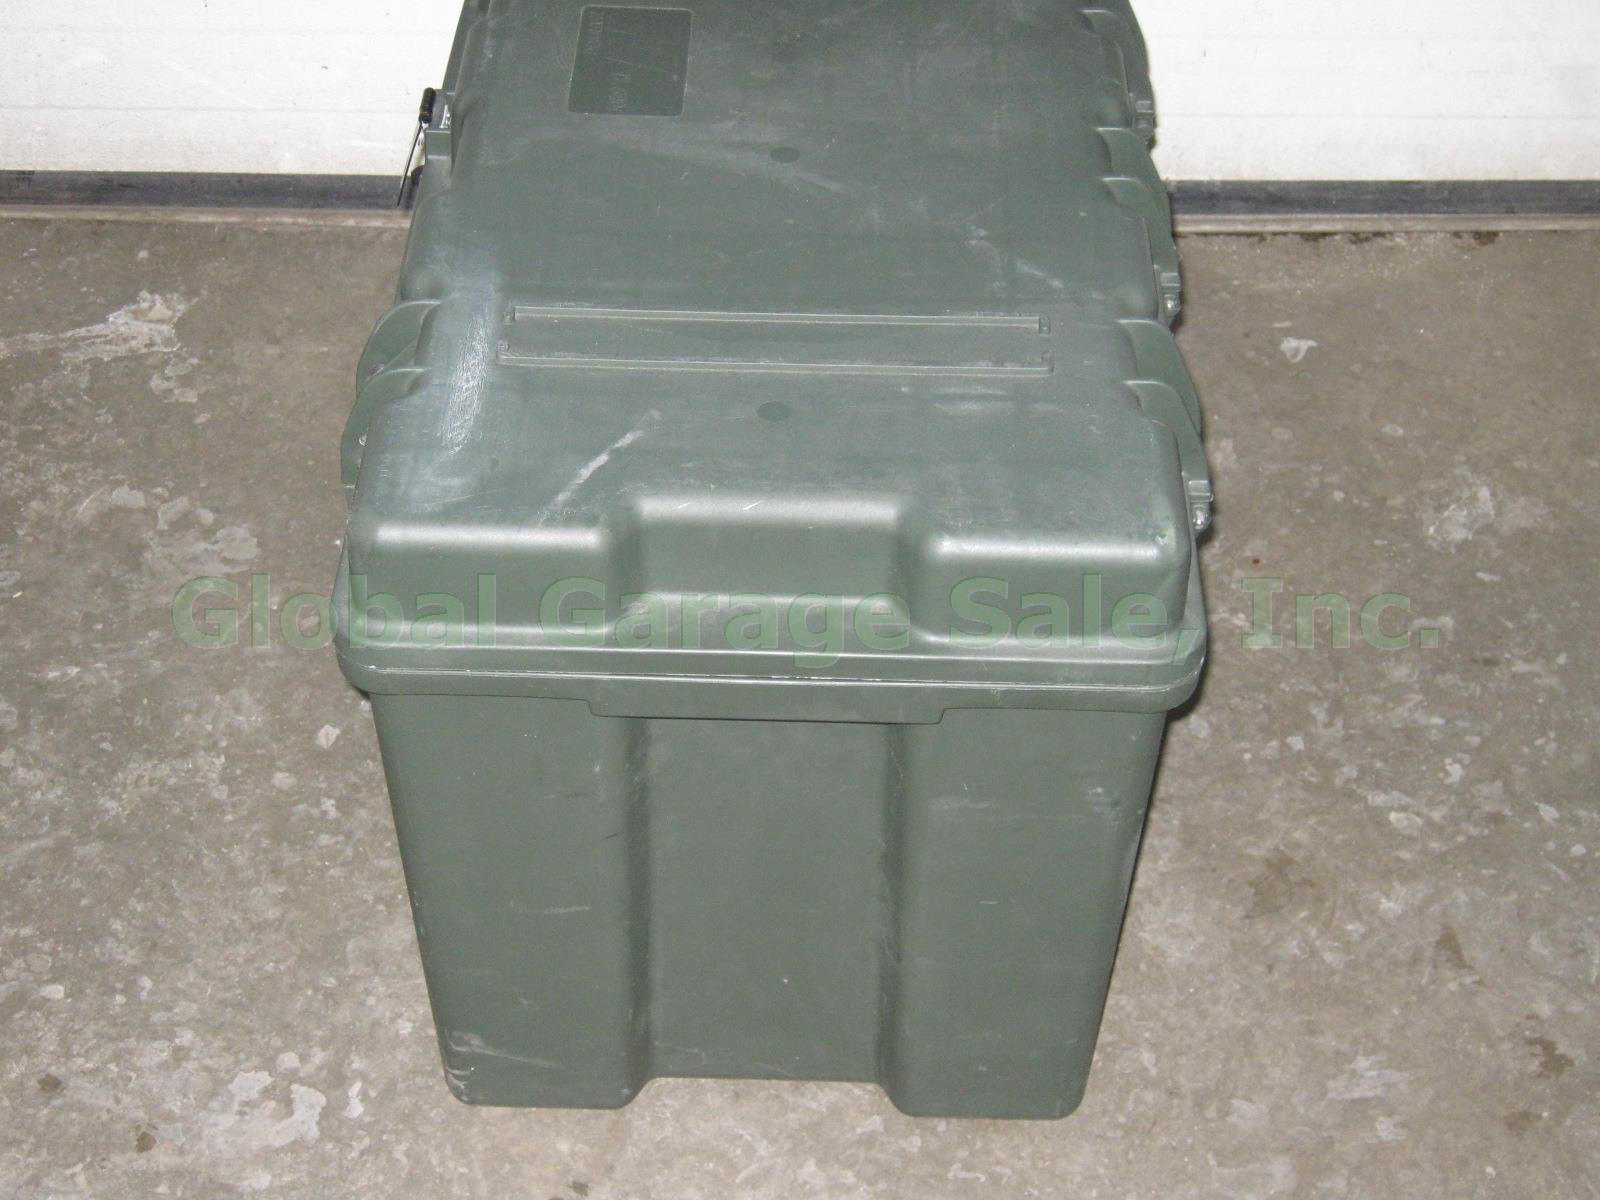 Pelican Hardigg TL 500i Tuff Box Army Military Storage Trunk Green Foot Locker 3